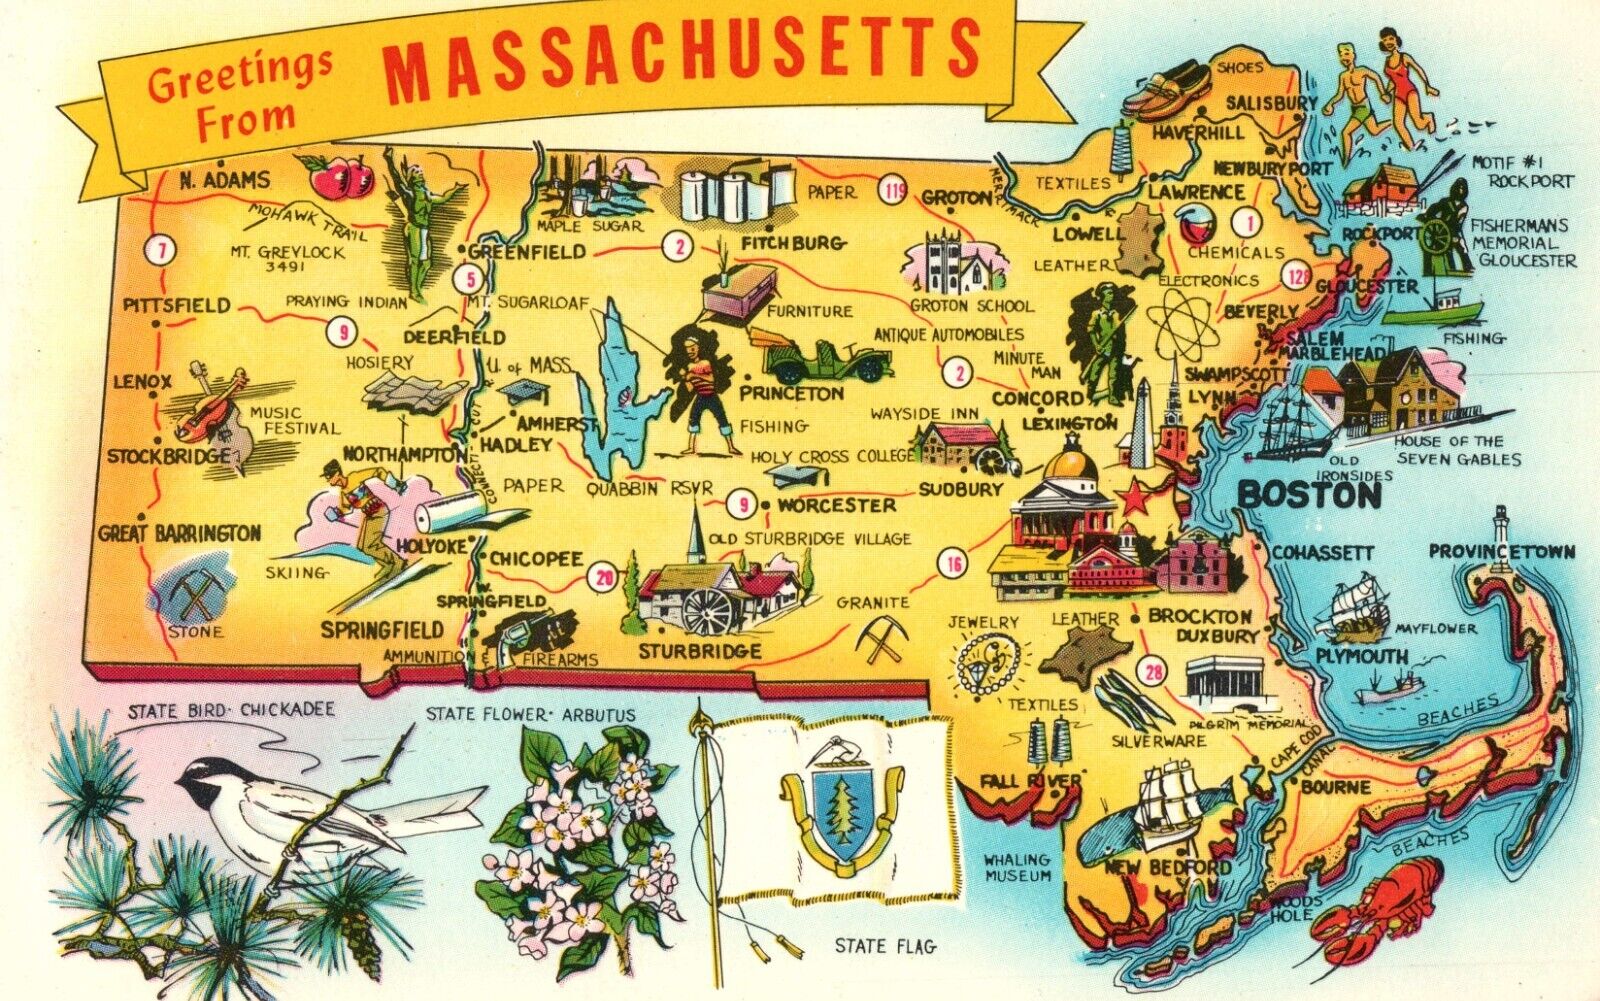 Greetings From Massachusetts State Map Landmarks Points of Interest Postcard